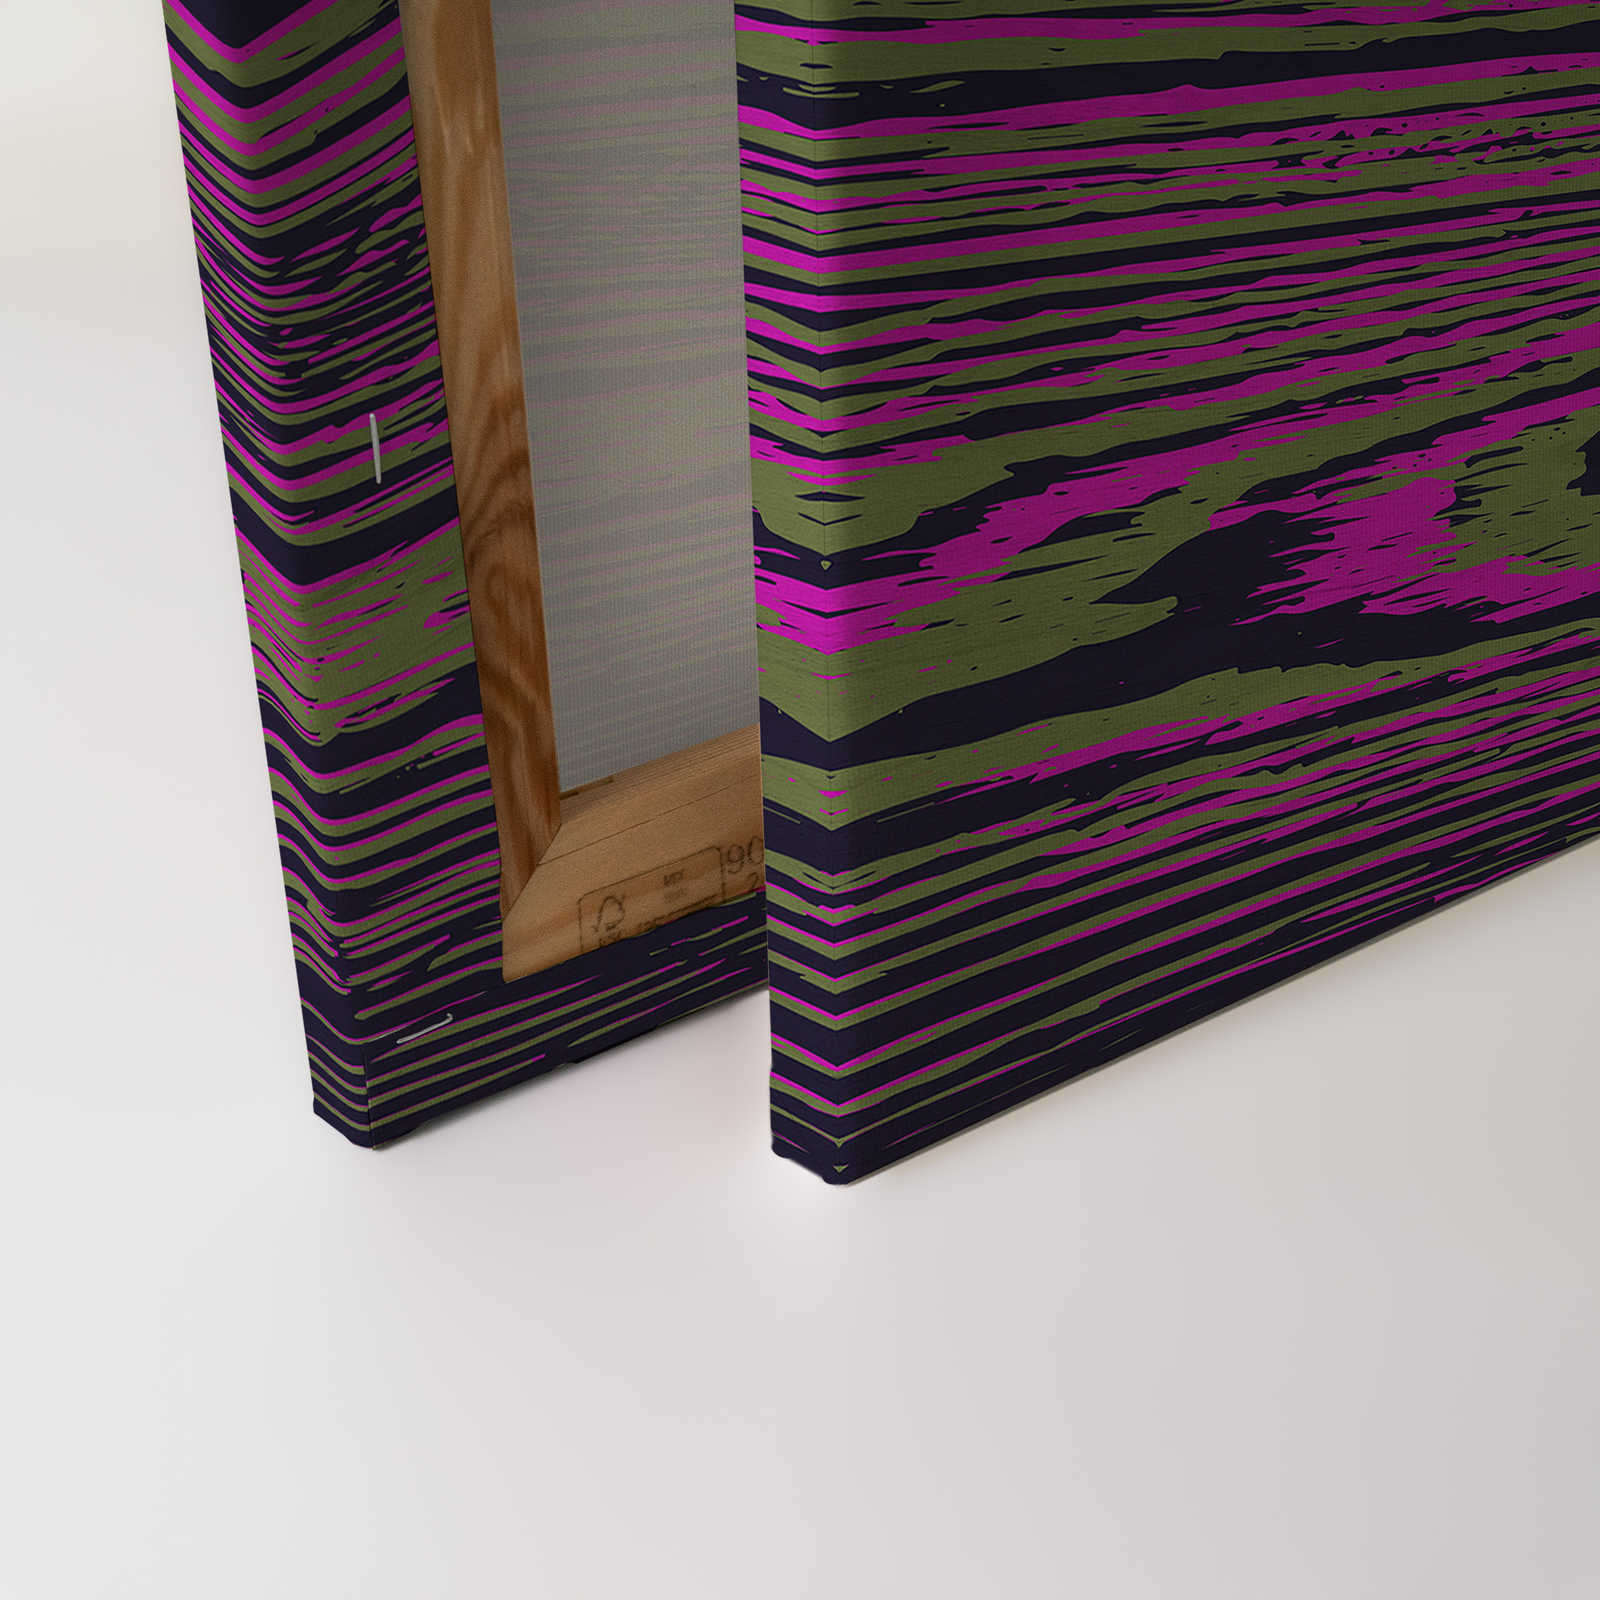             Kontiki 2 - Leinwandbild Neonfarbene Holzmaserung, Pink & Schwarz – 1,20 m x 0,80 m
        